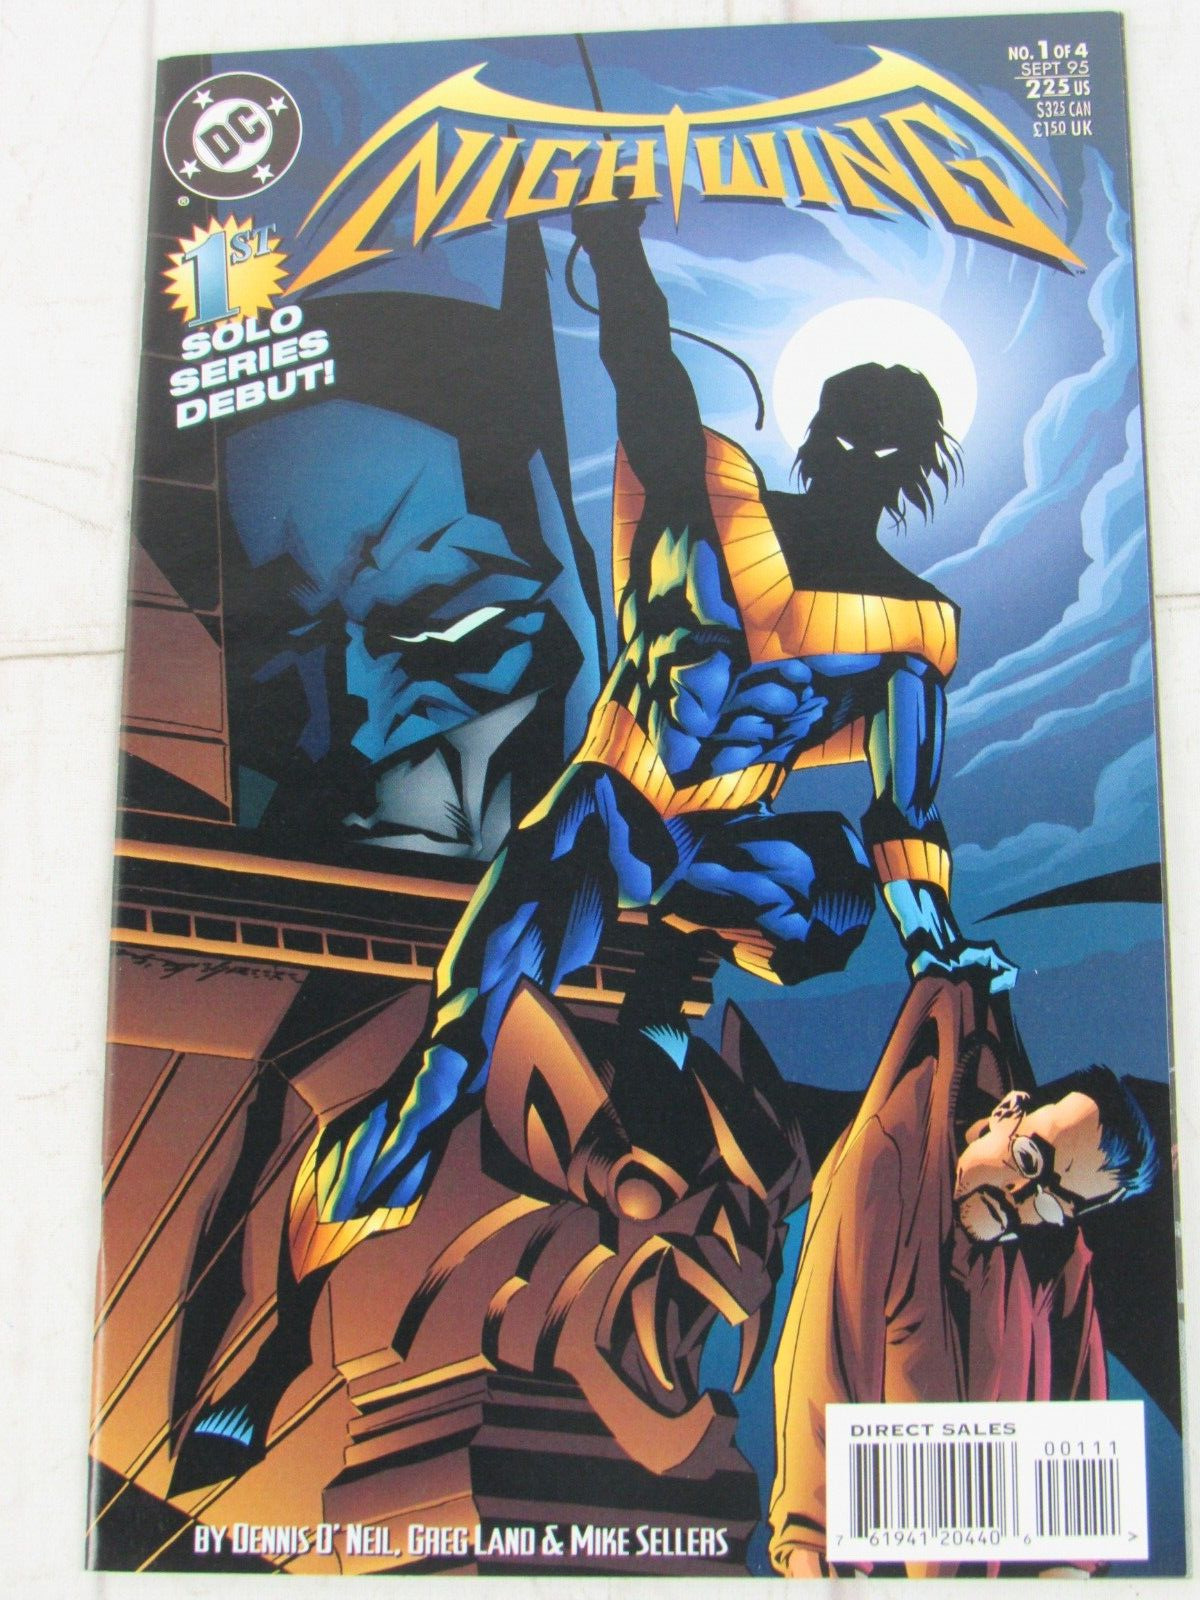 Nightwing #1 Sept. 1995 DC Comics